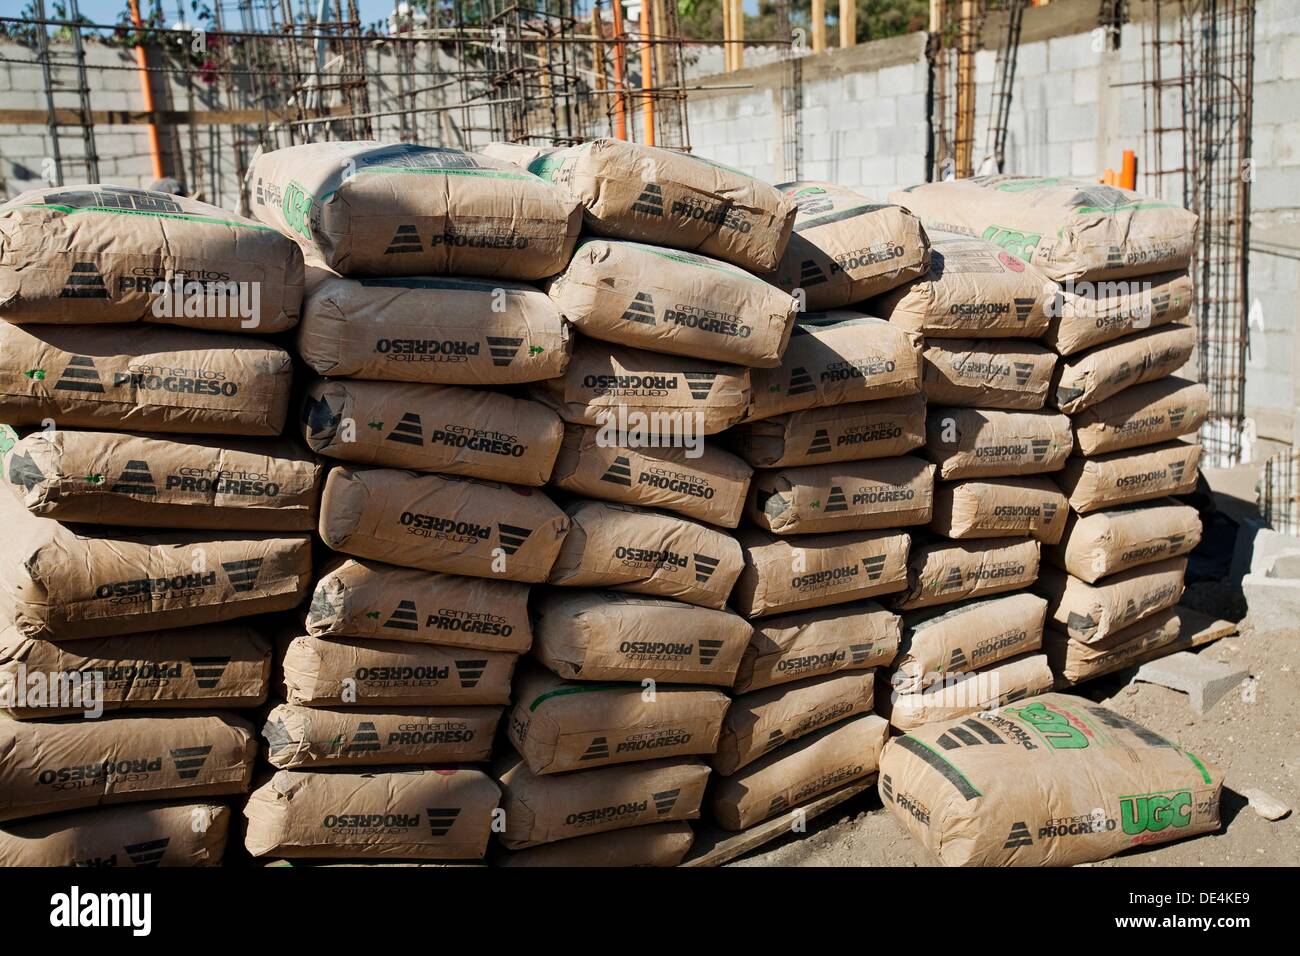 Construction site, cement bags Stock Photo: 60339393 - Alamy